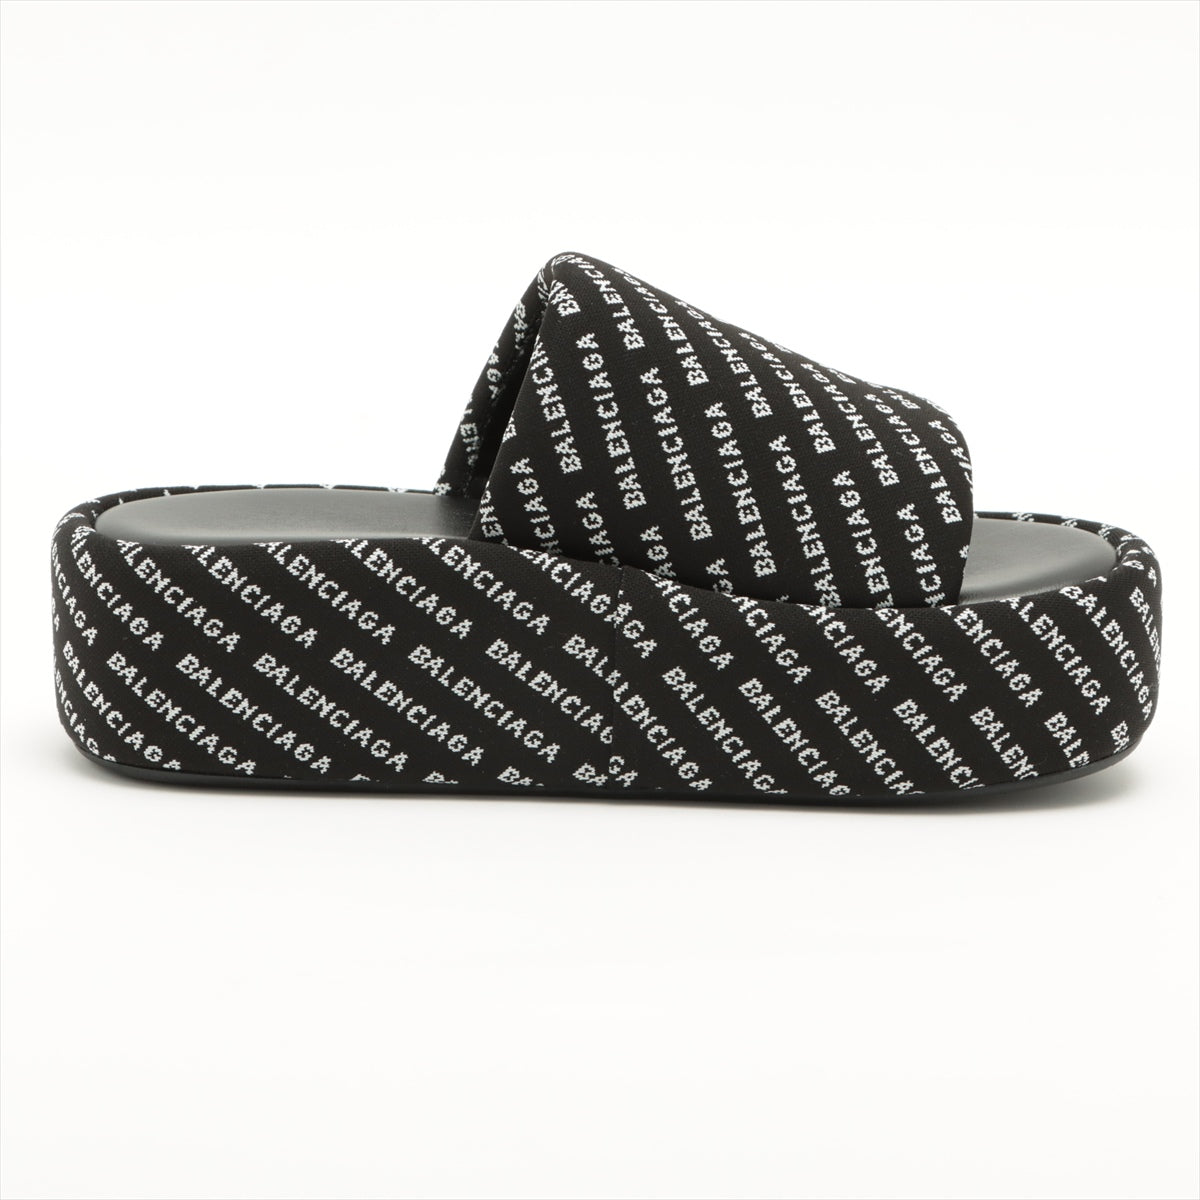 Balenciaga Leather x fabric Sandals 35 Ladies' Black Logo full pattern platform 656988 box There is a bag